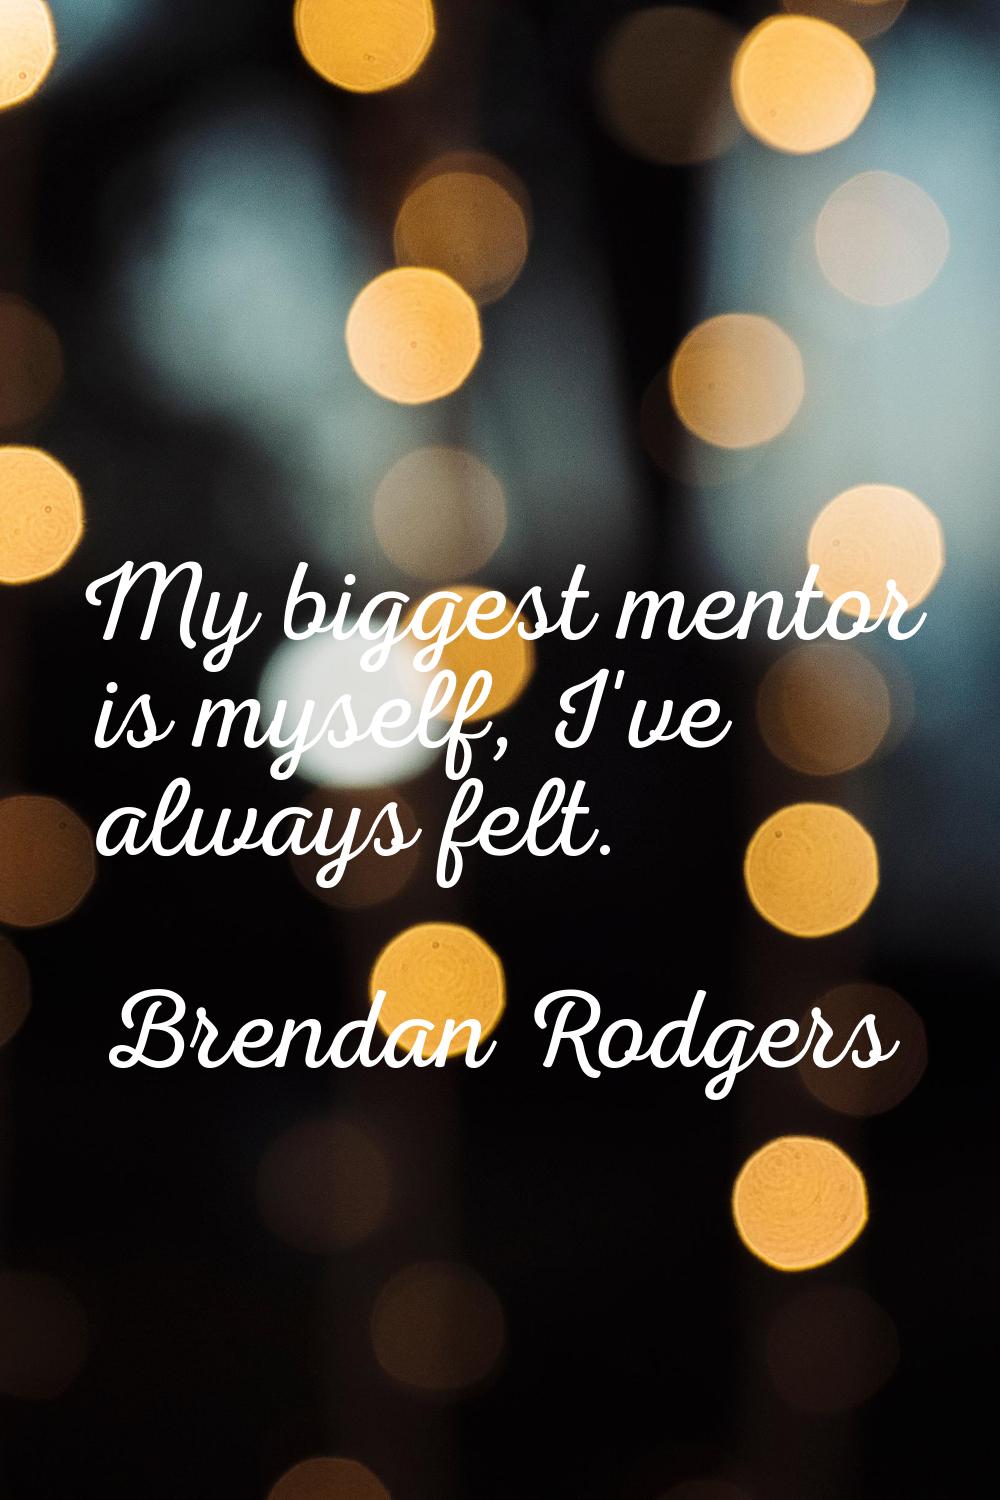 My biggest mentor is myself, I've always felt.